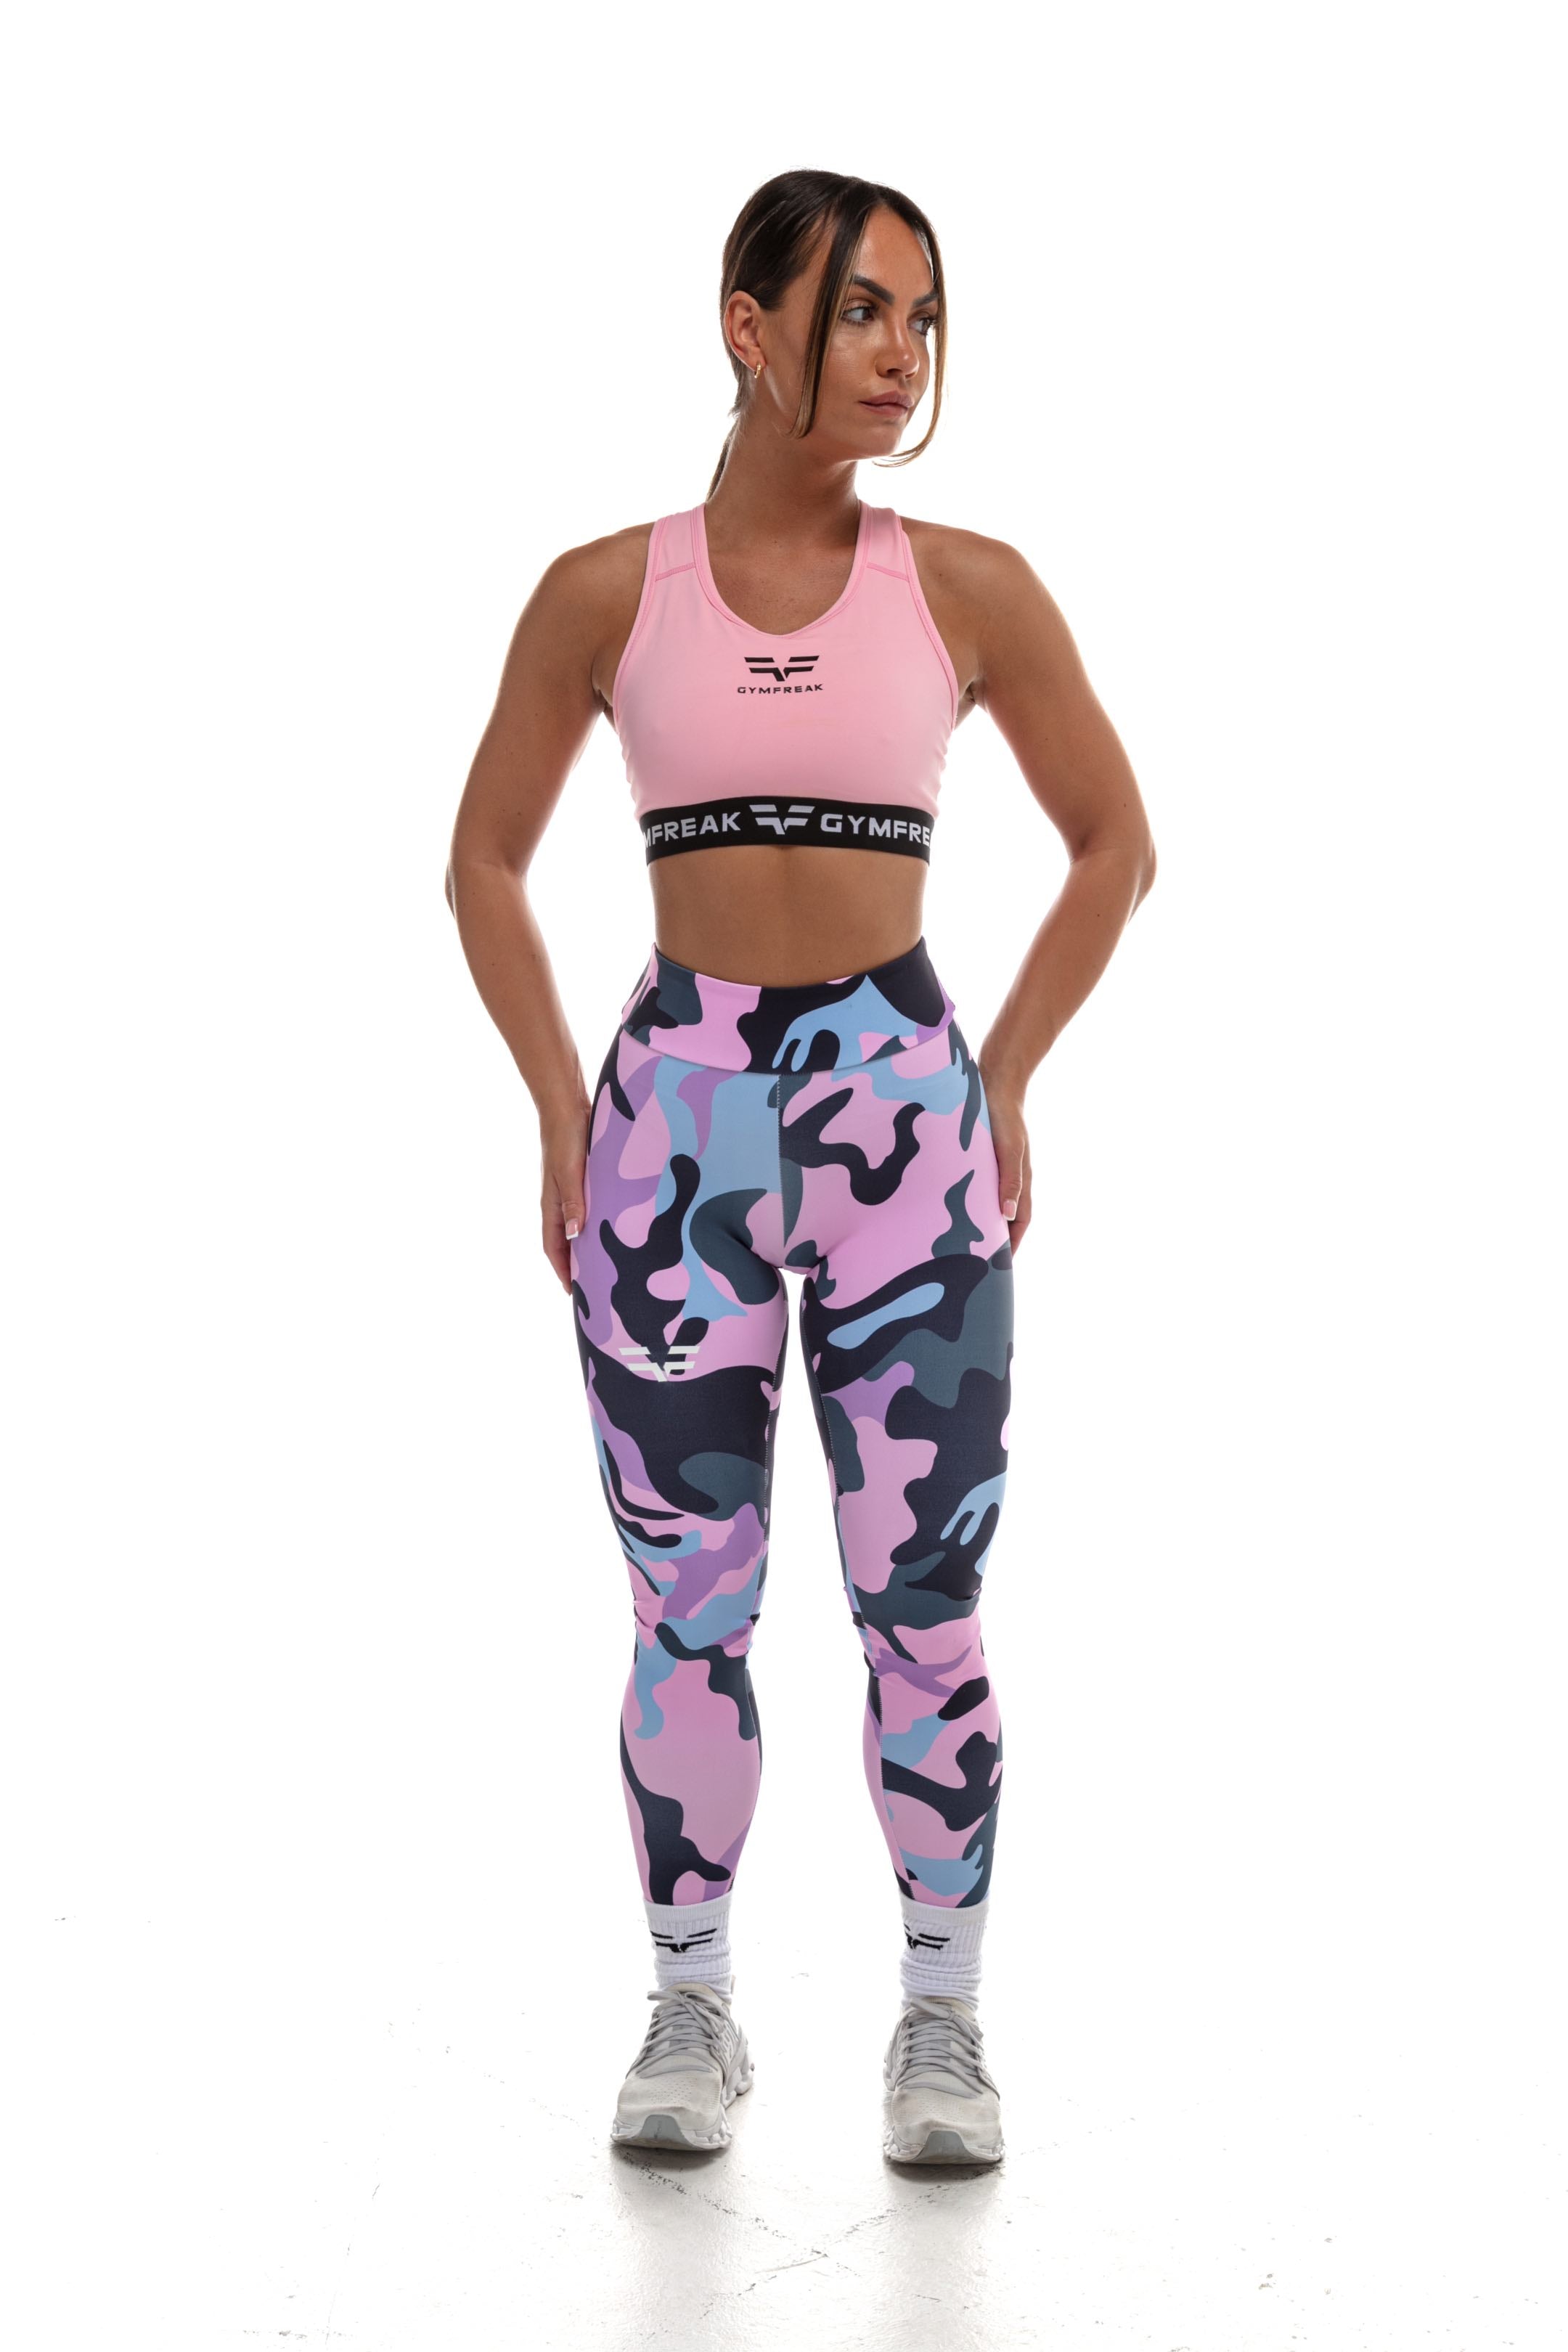 GymFreak Womens Camo Leggings - Pink